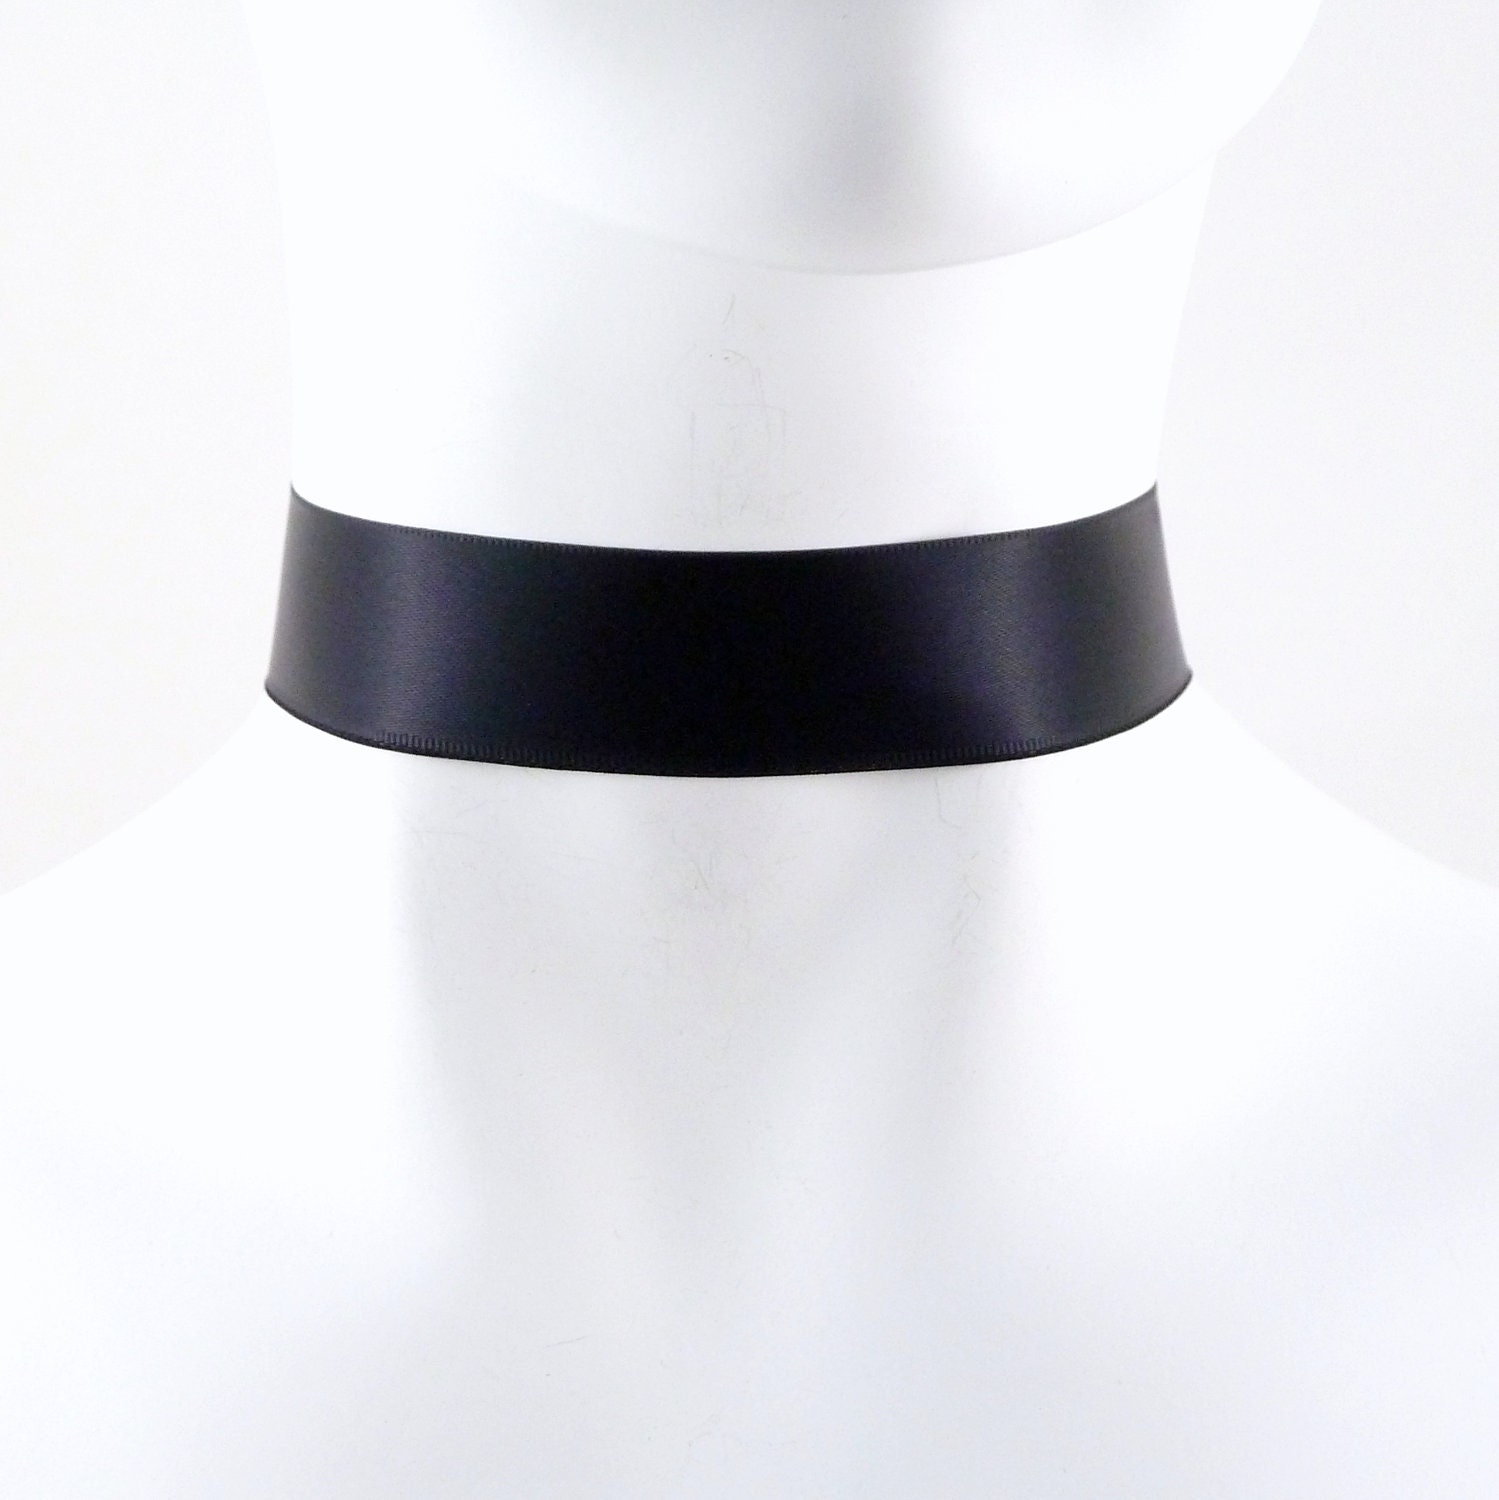 Satin Choker Necklace Simple Plain Basic Classic Black by Arthlin